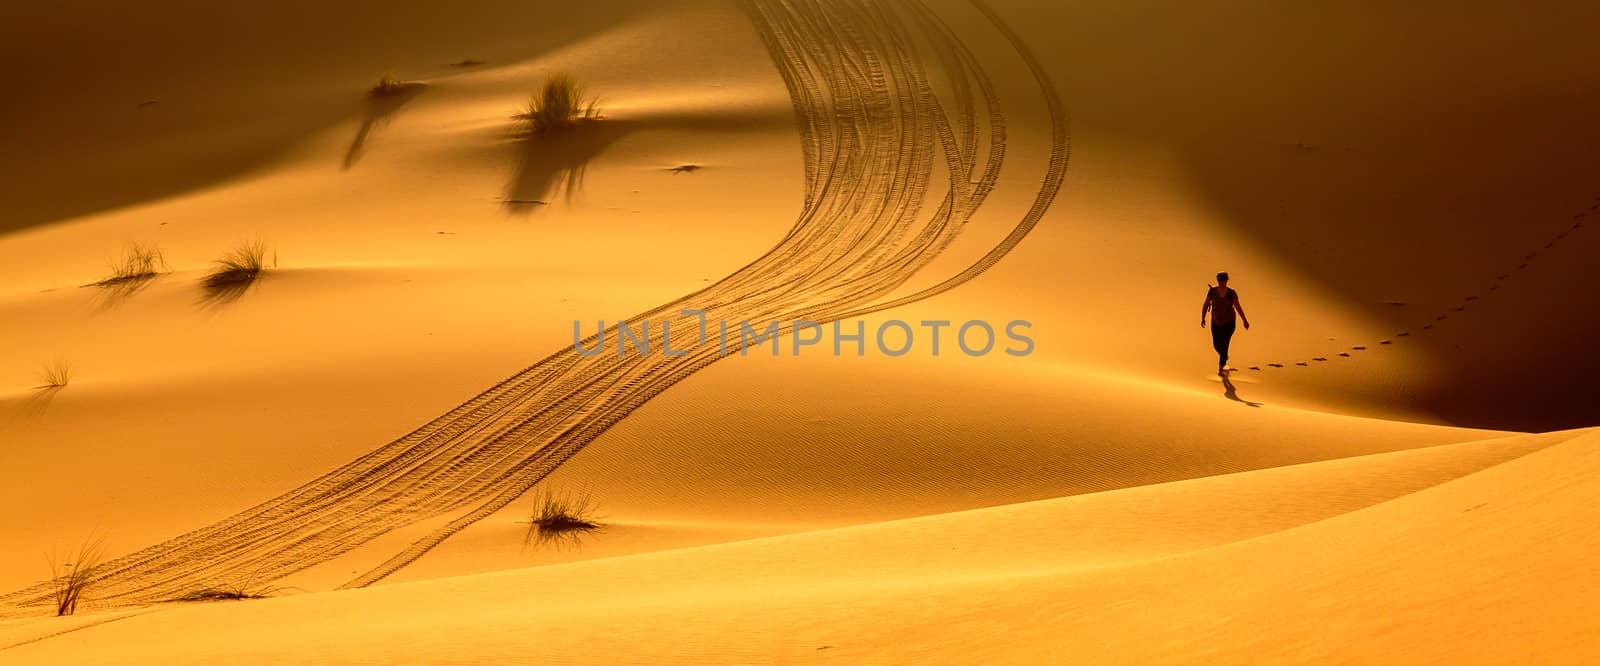 Merzouga, Morocco - Feb 24, 2016: Woman trekking along hot desert, beautiful orange sandy dunes, exploring Sahara, active vacation, discovering nature concept by pixinoo